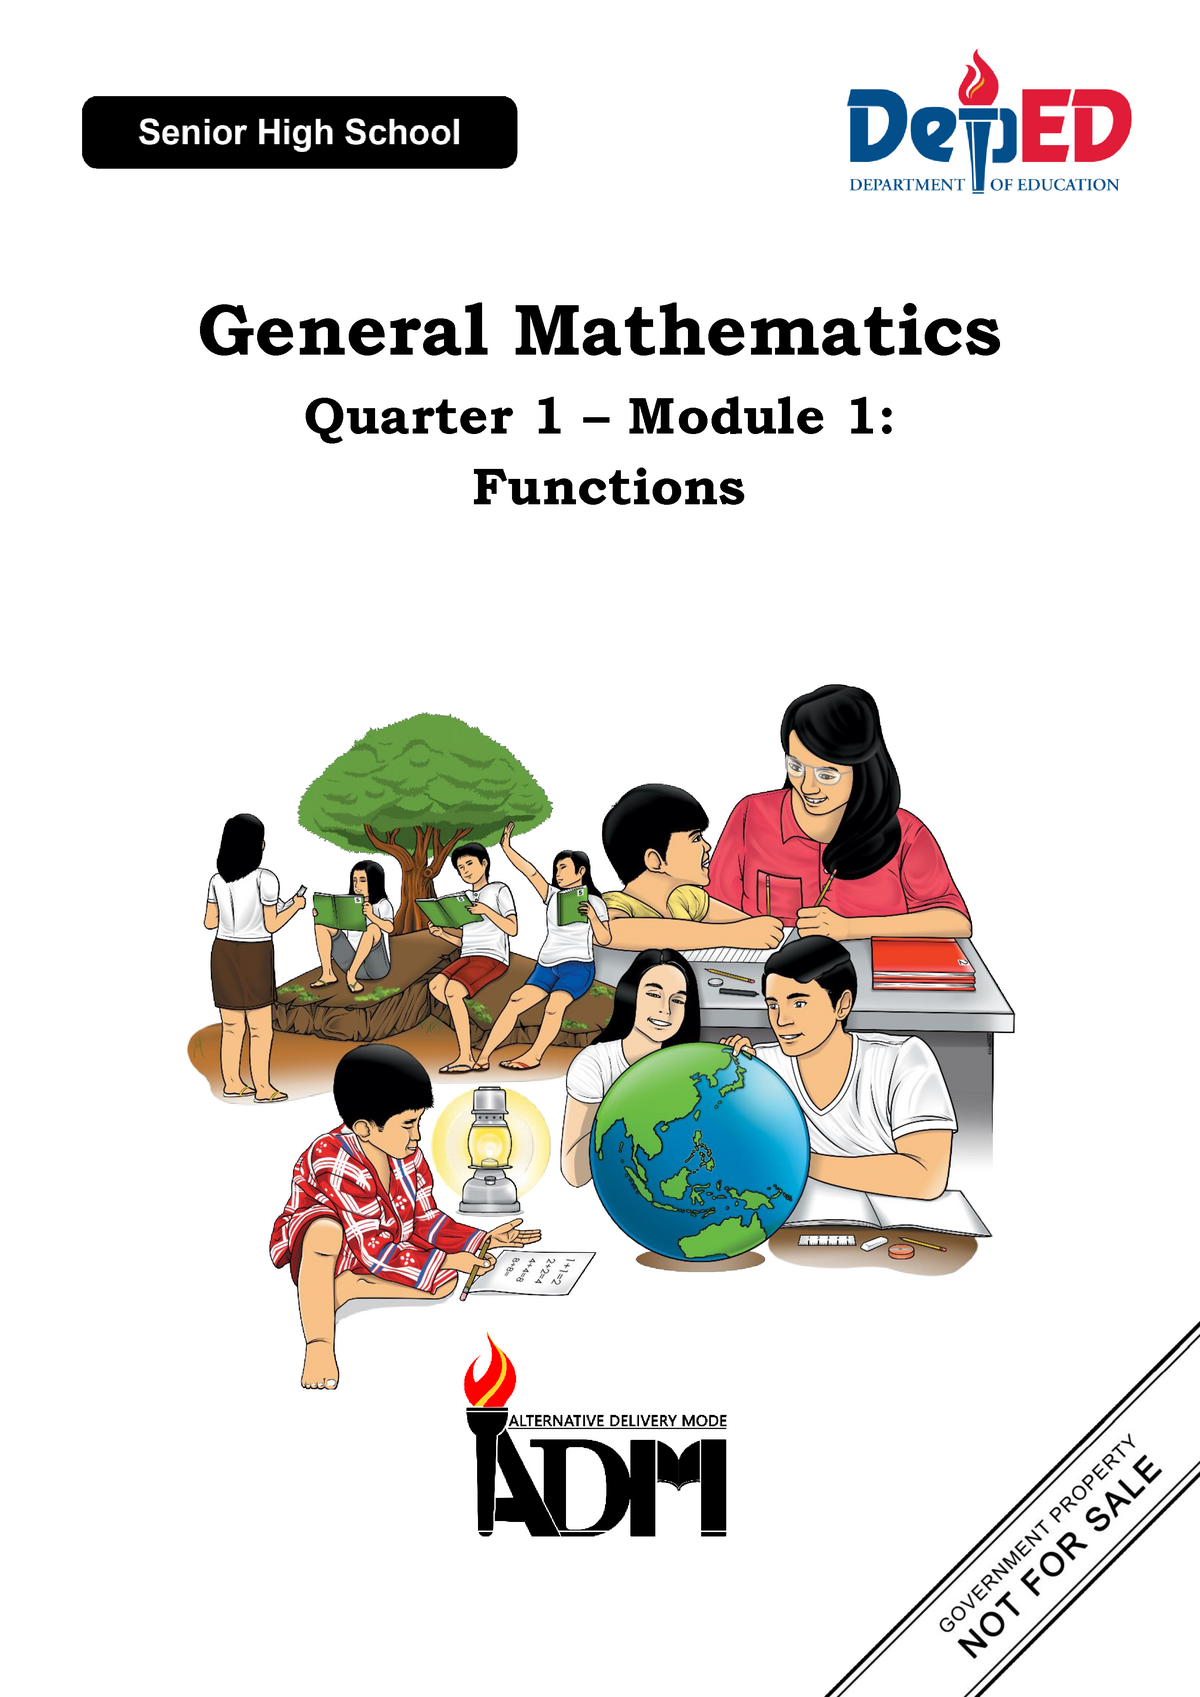 Gen Math11 Q1 Mod1 Functions With 08082020 General Mathematics Quarter 1 Module 1 Functions